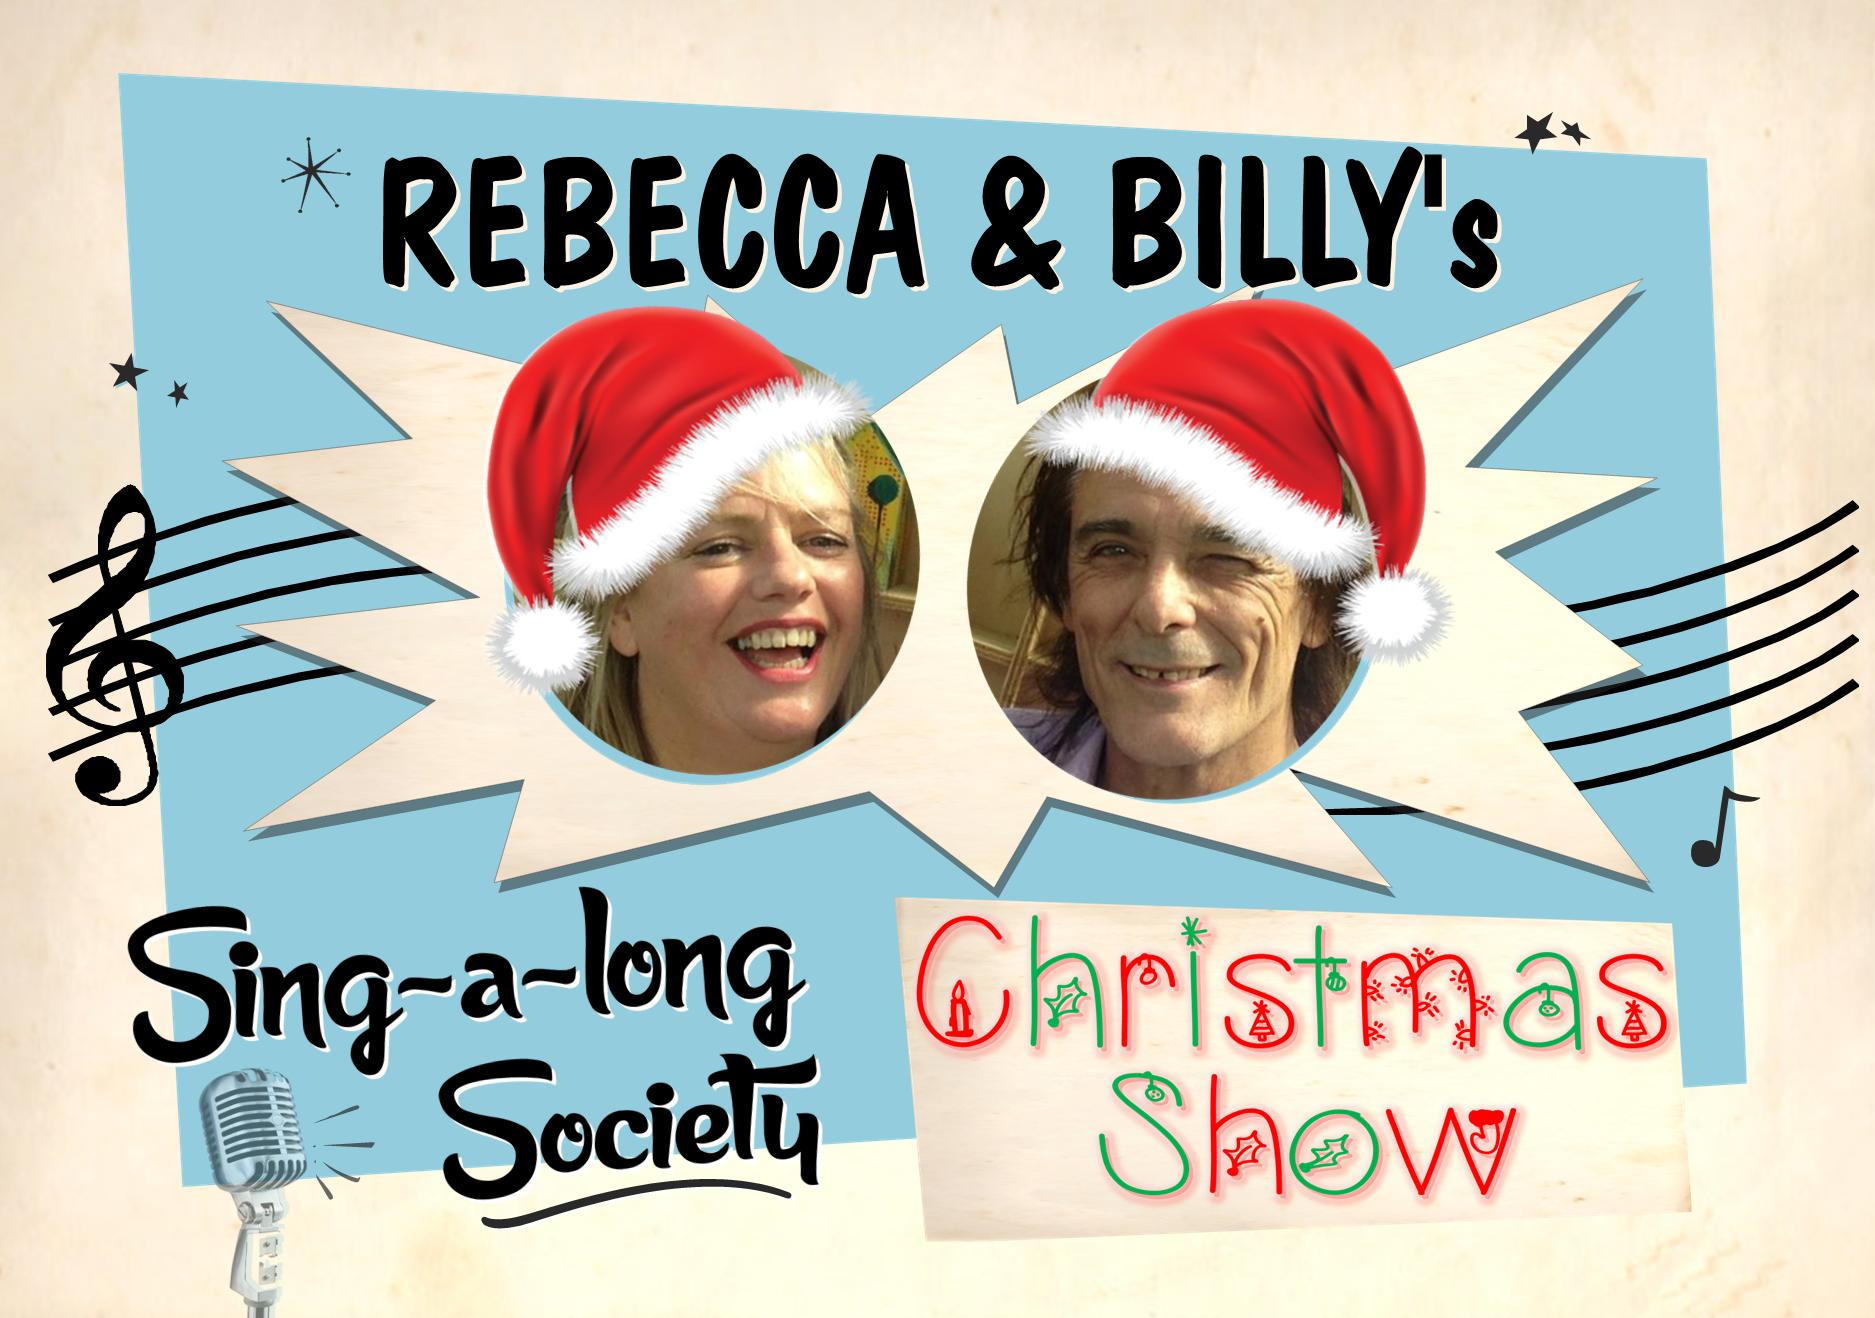 Rebecca & Billy's Singalong